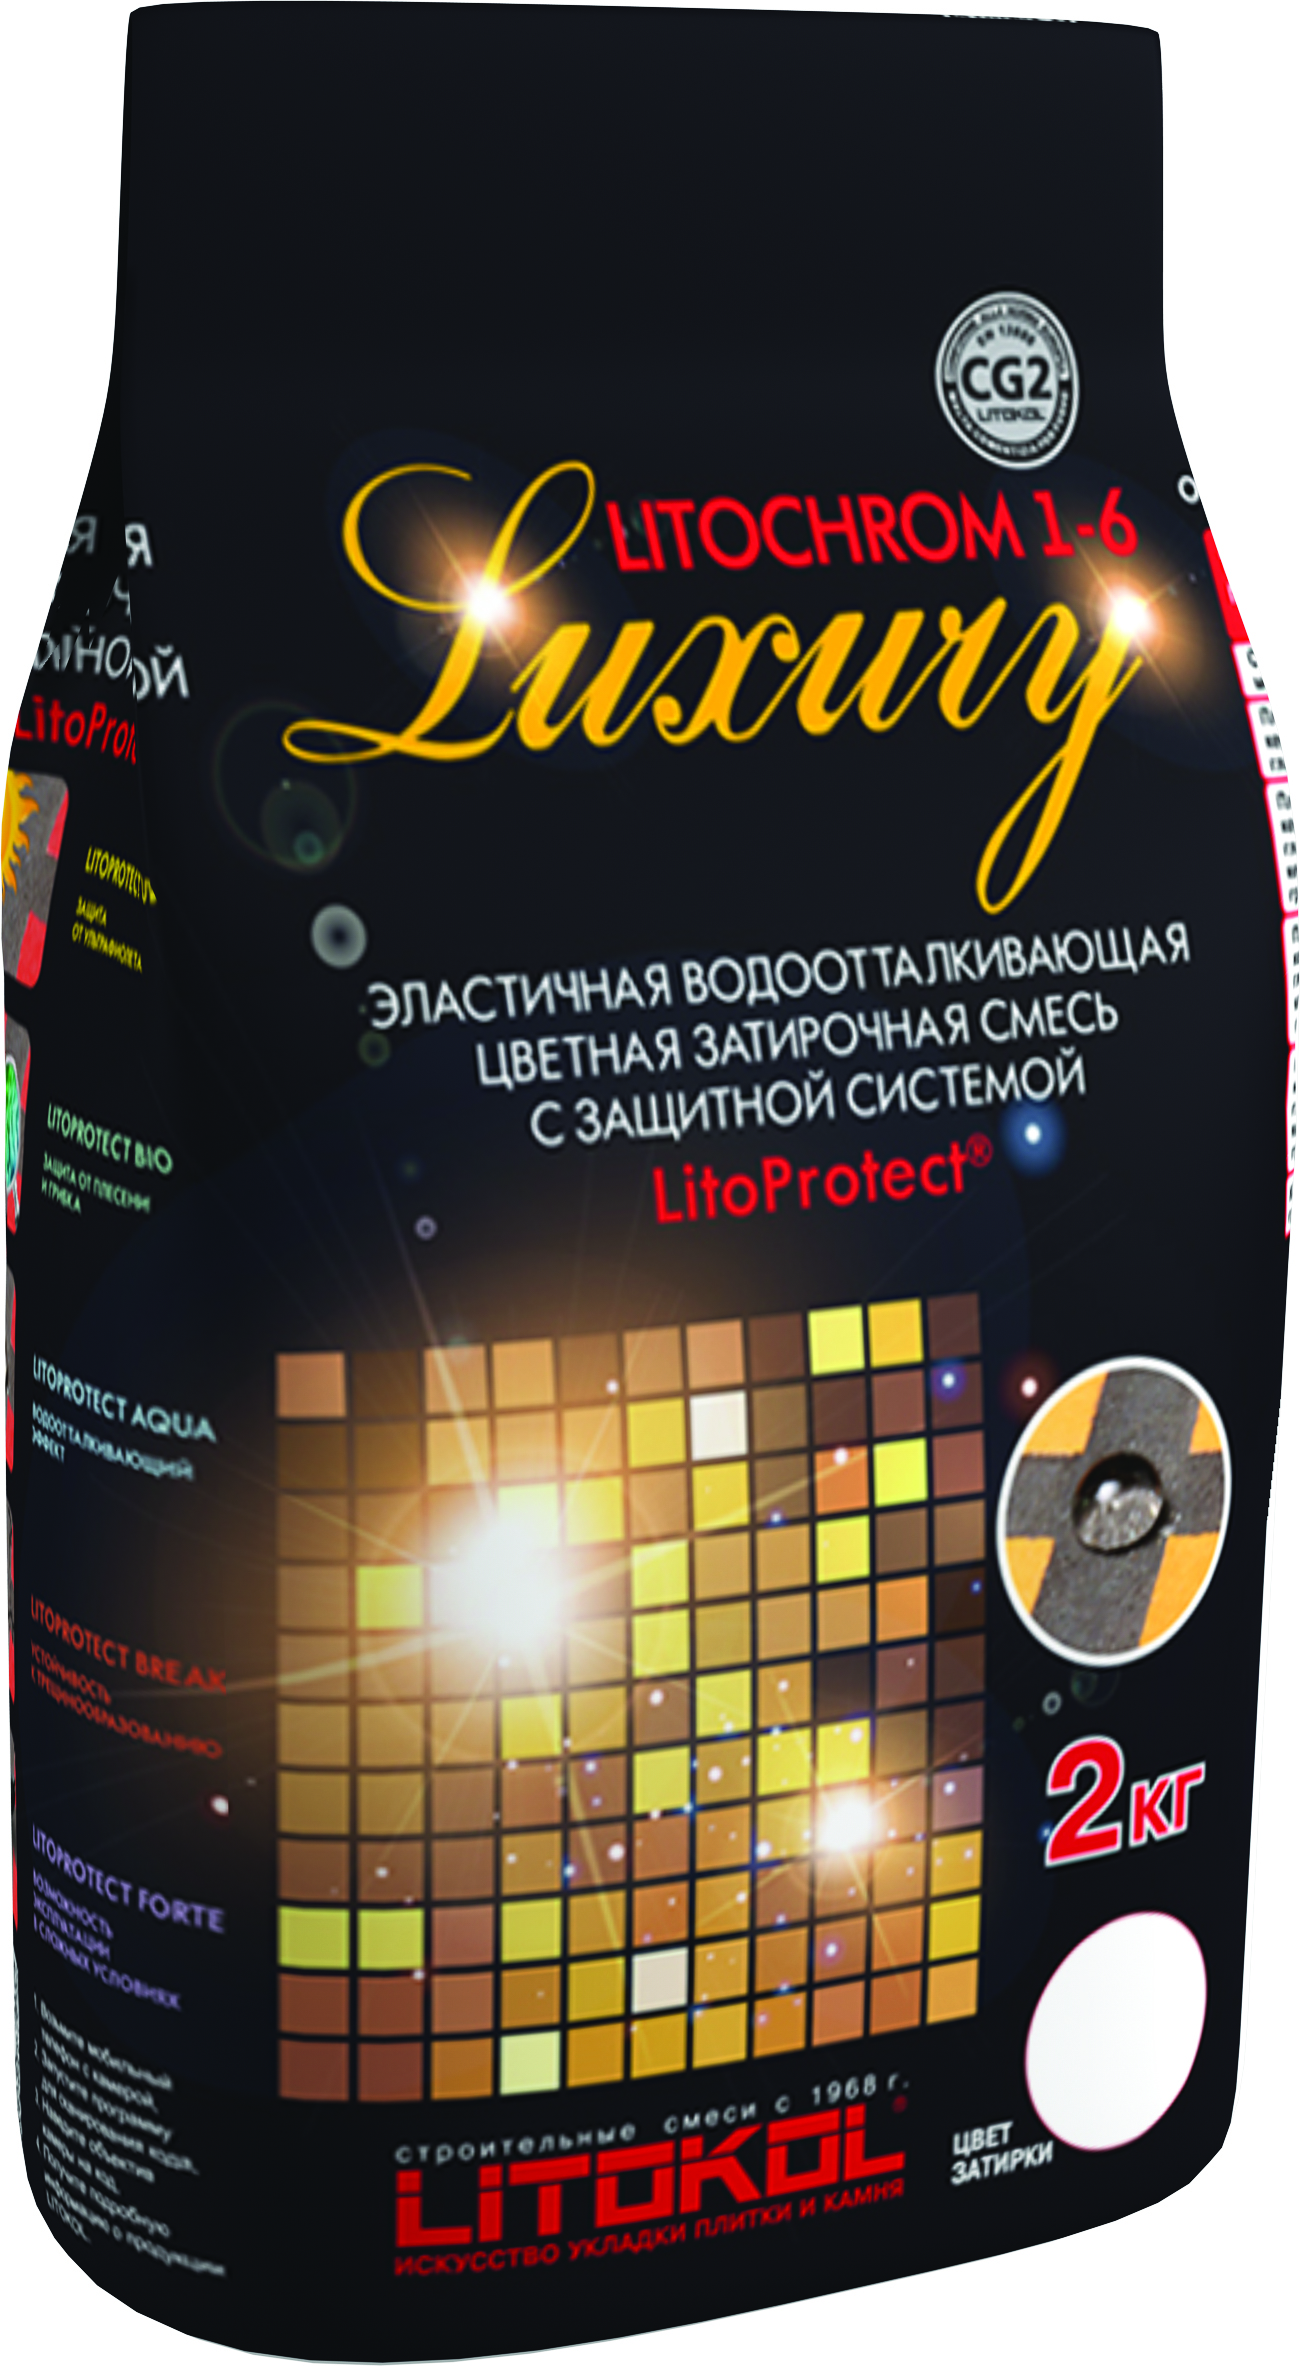 Купить Litokol Litochrom 1-6 Luxury C.680, 2 кг